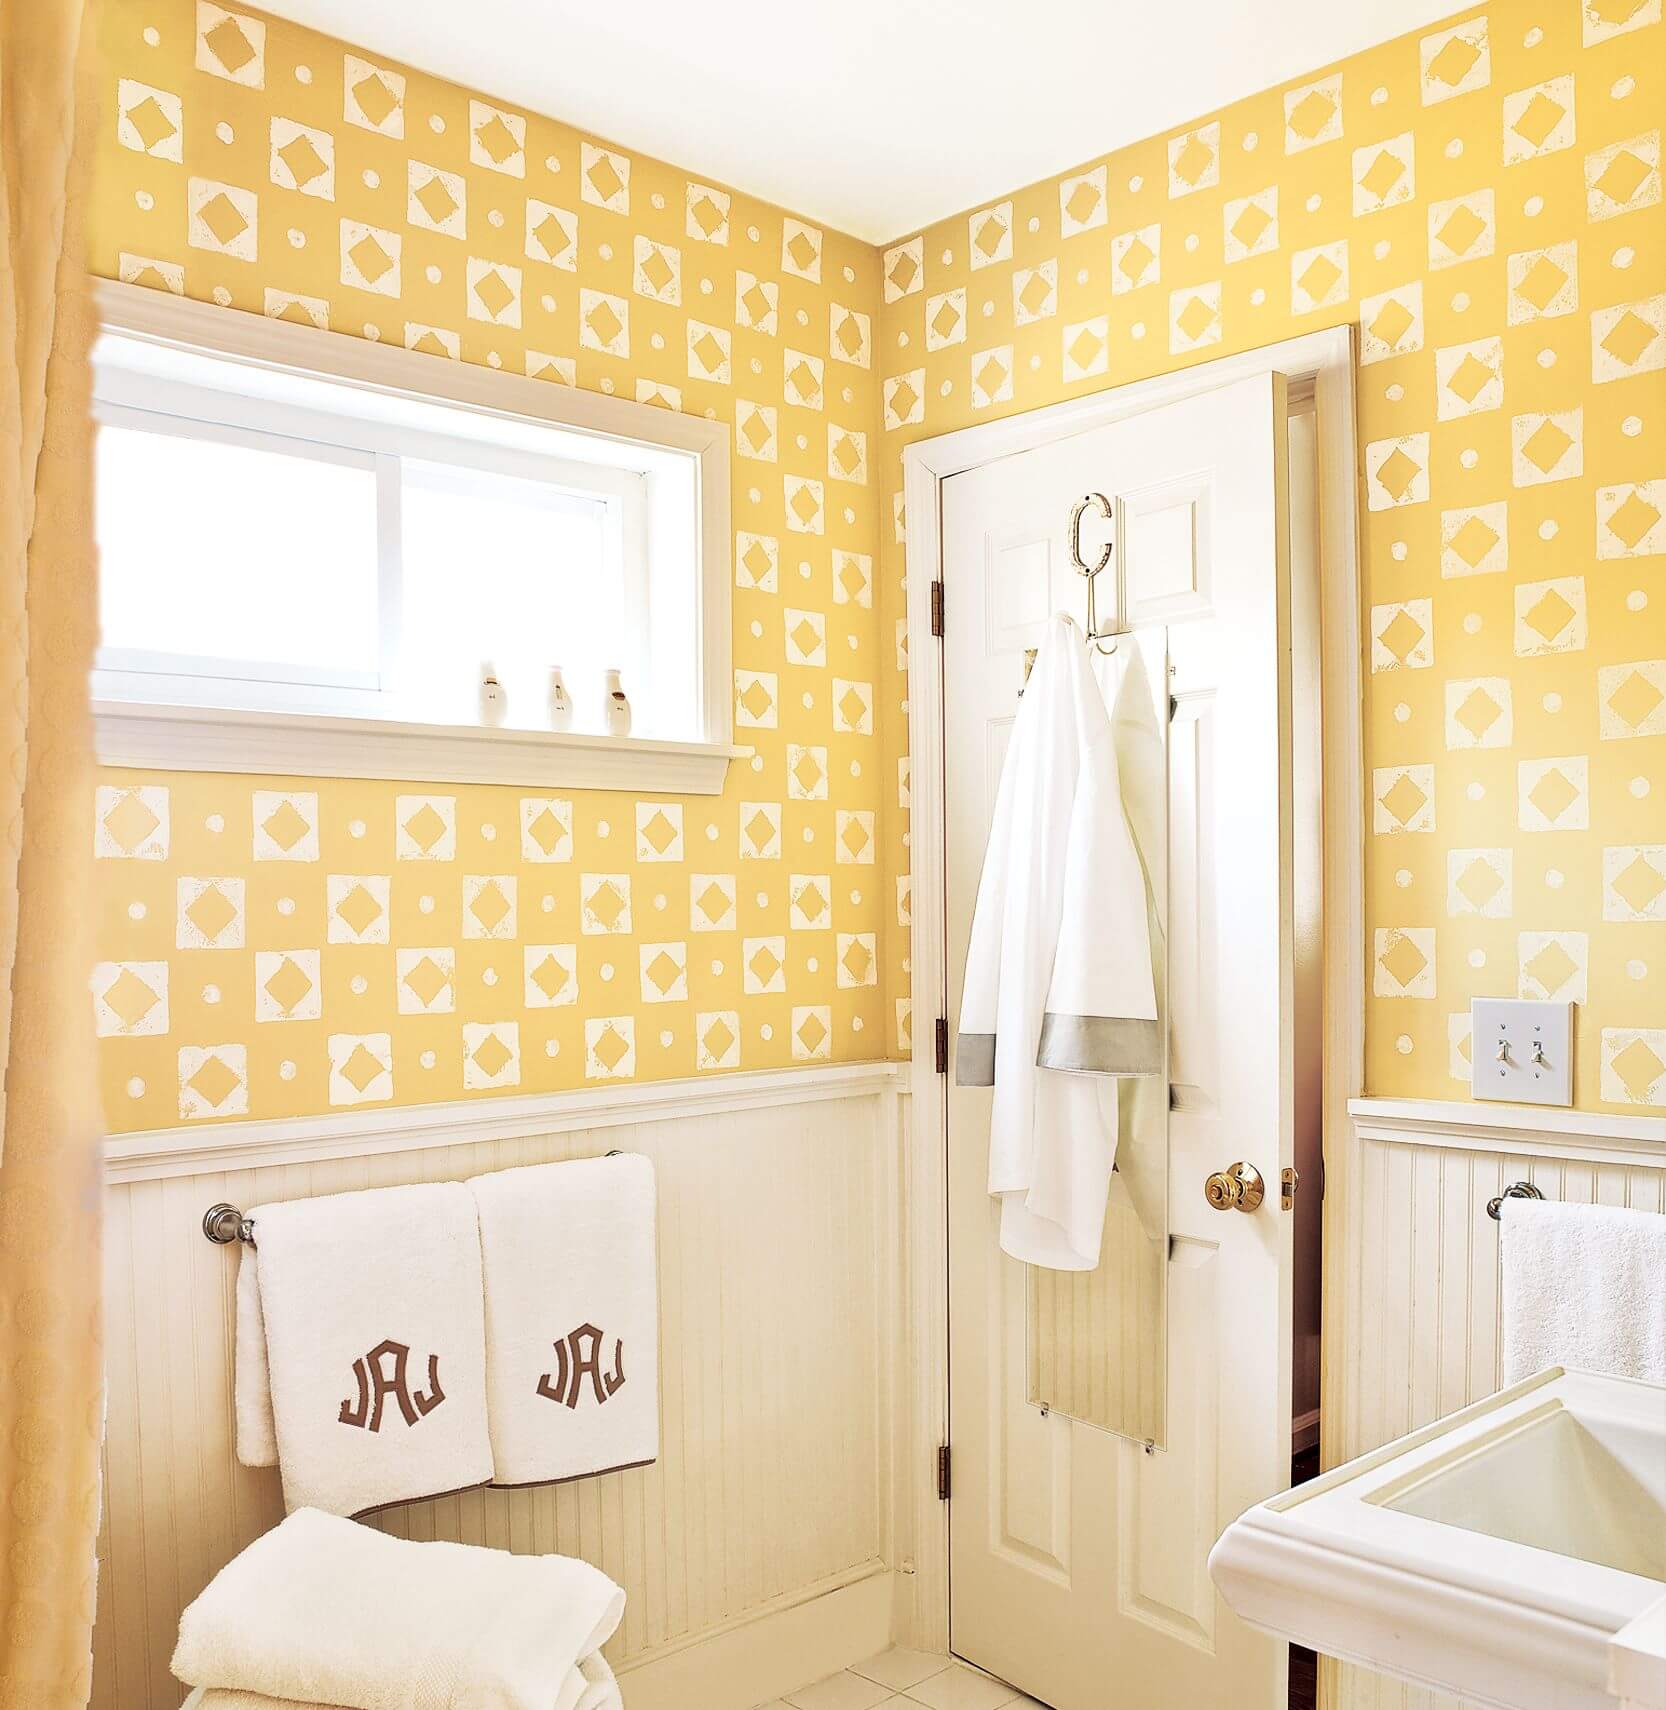 Get 12 Best Bathroom Wall Decor Ideas to Enhance Bathroom